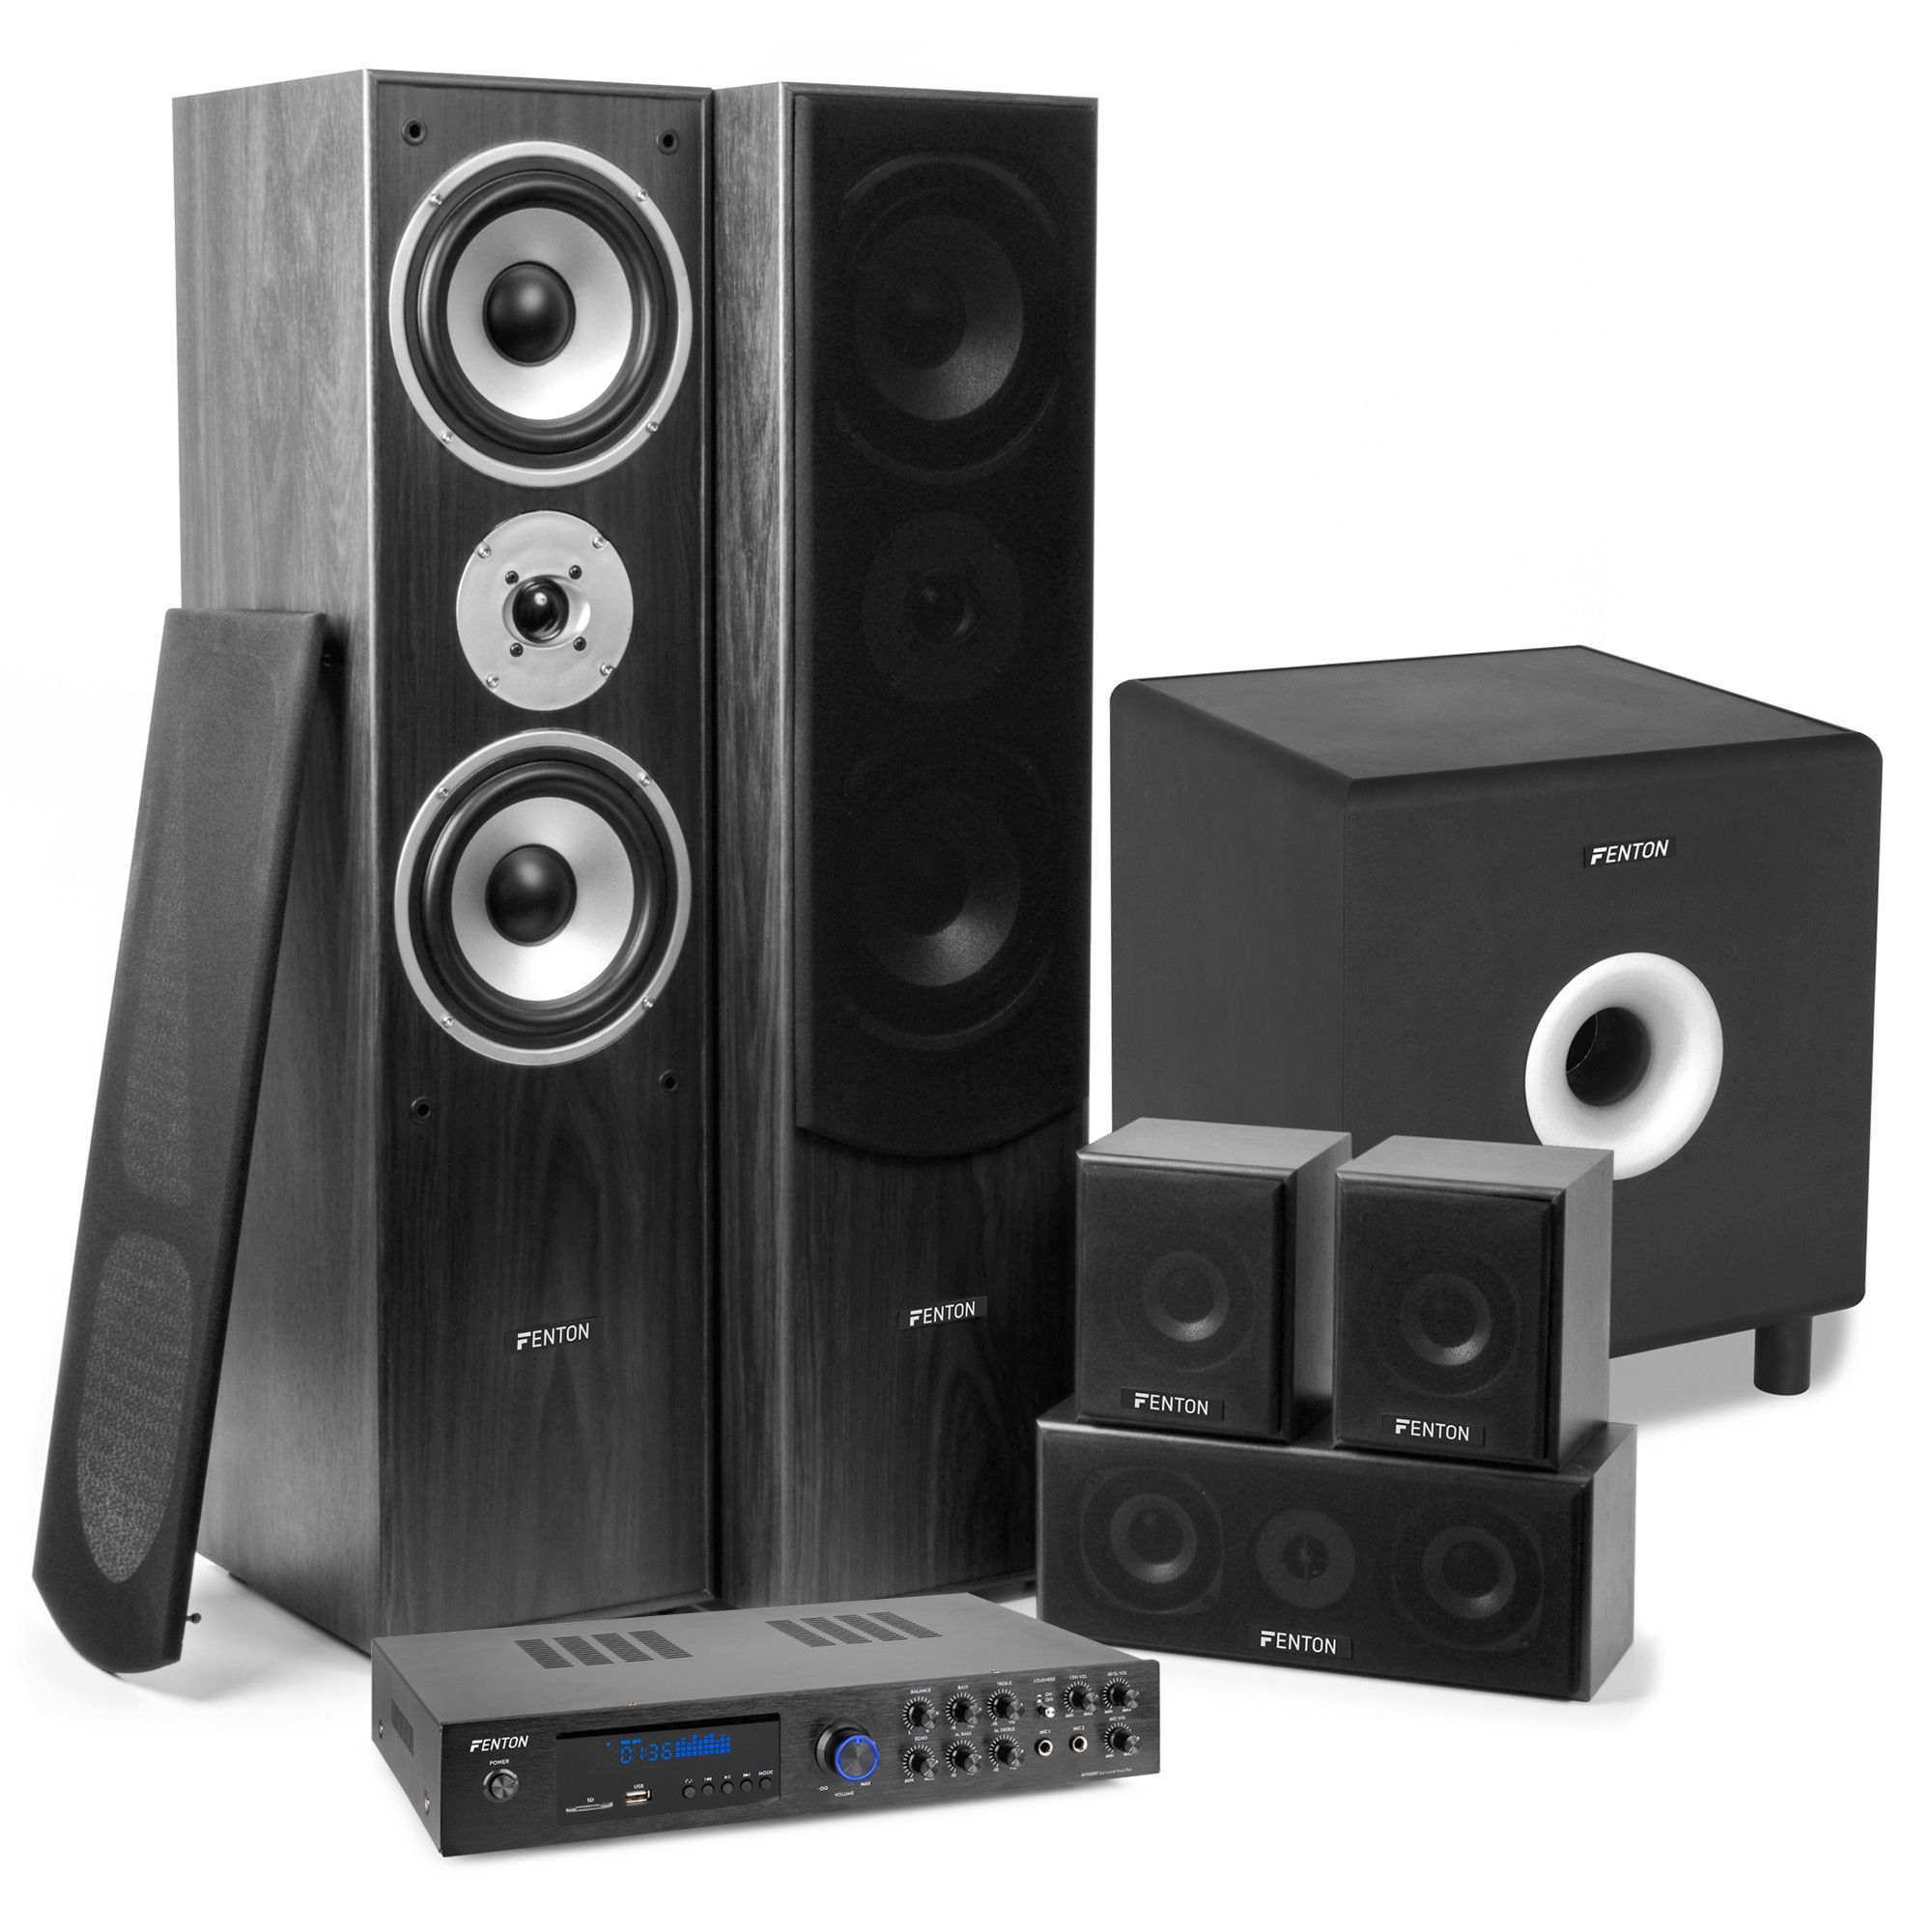 Fenton home cinema set - AV550BT versterker Bluetooth, zwarte surround speakers subwoofer kopen?